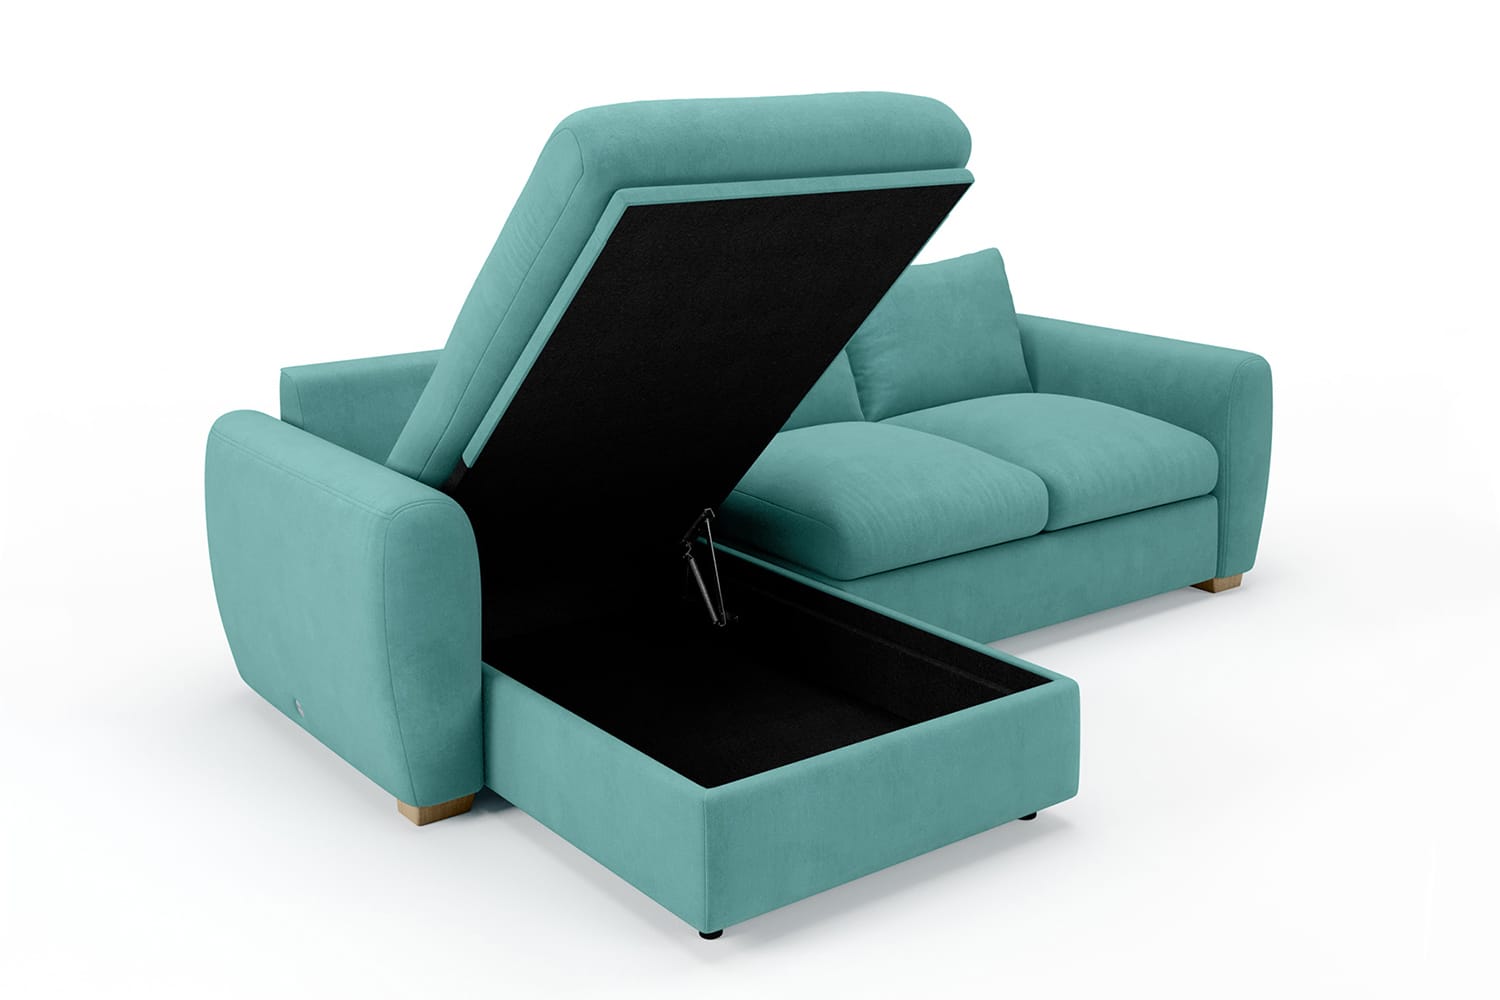 SNUG | The Cloud Sundae Chaise Corner Sofa in Soft Teal variant_40414969954352